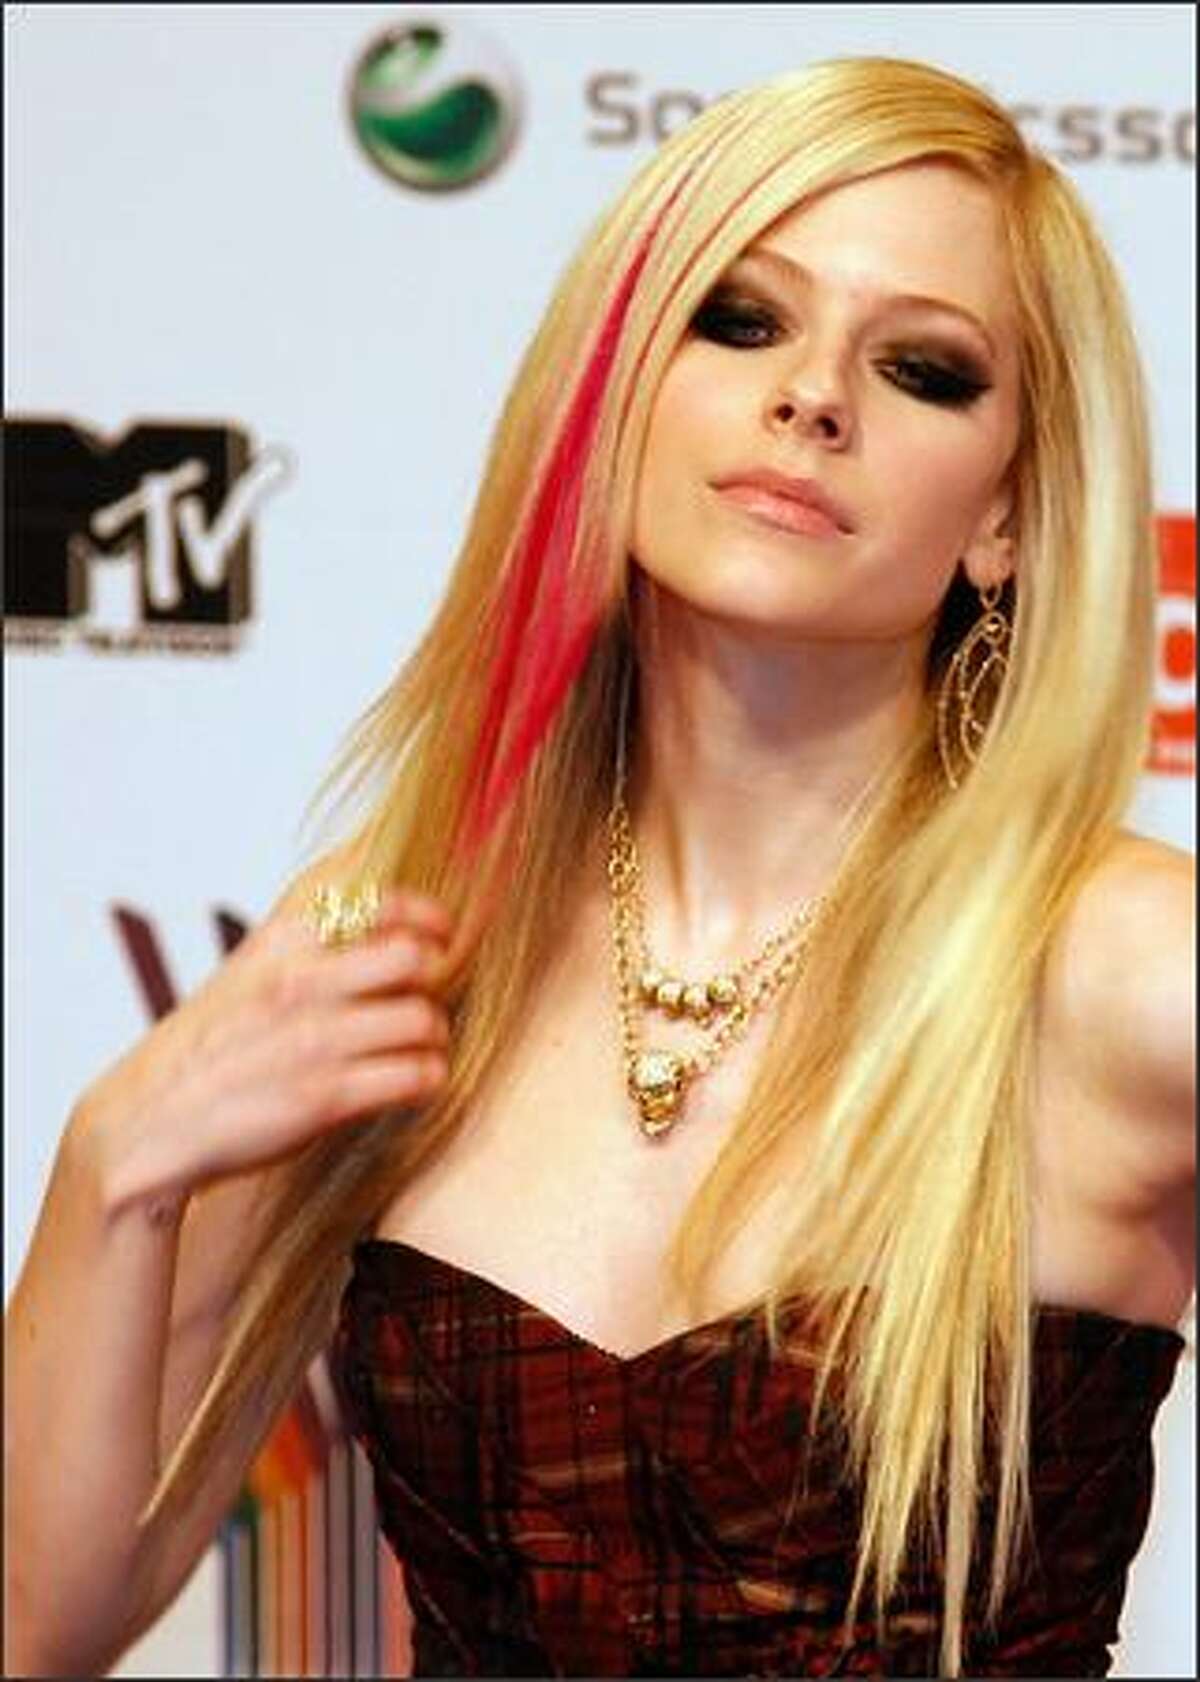 Canadian singer Avril Lavigne poses for photographers as she arrives for the MTV Europe Music Awards.